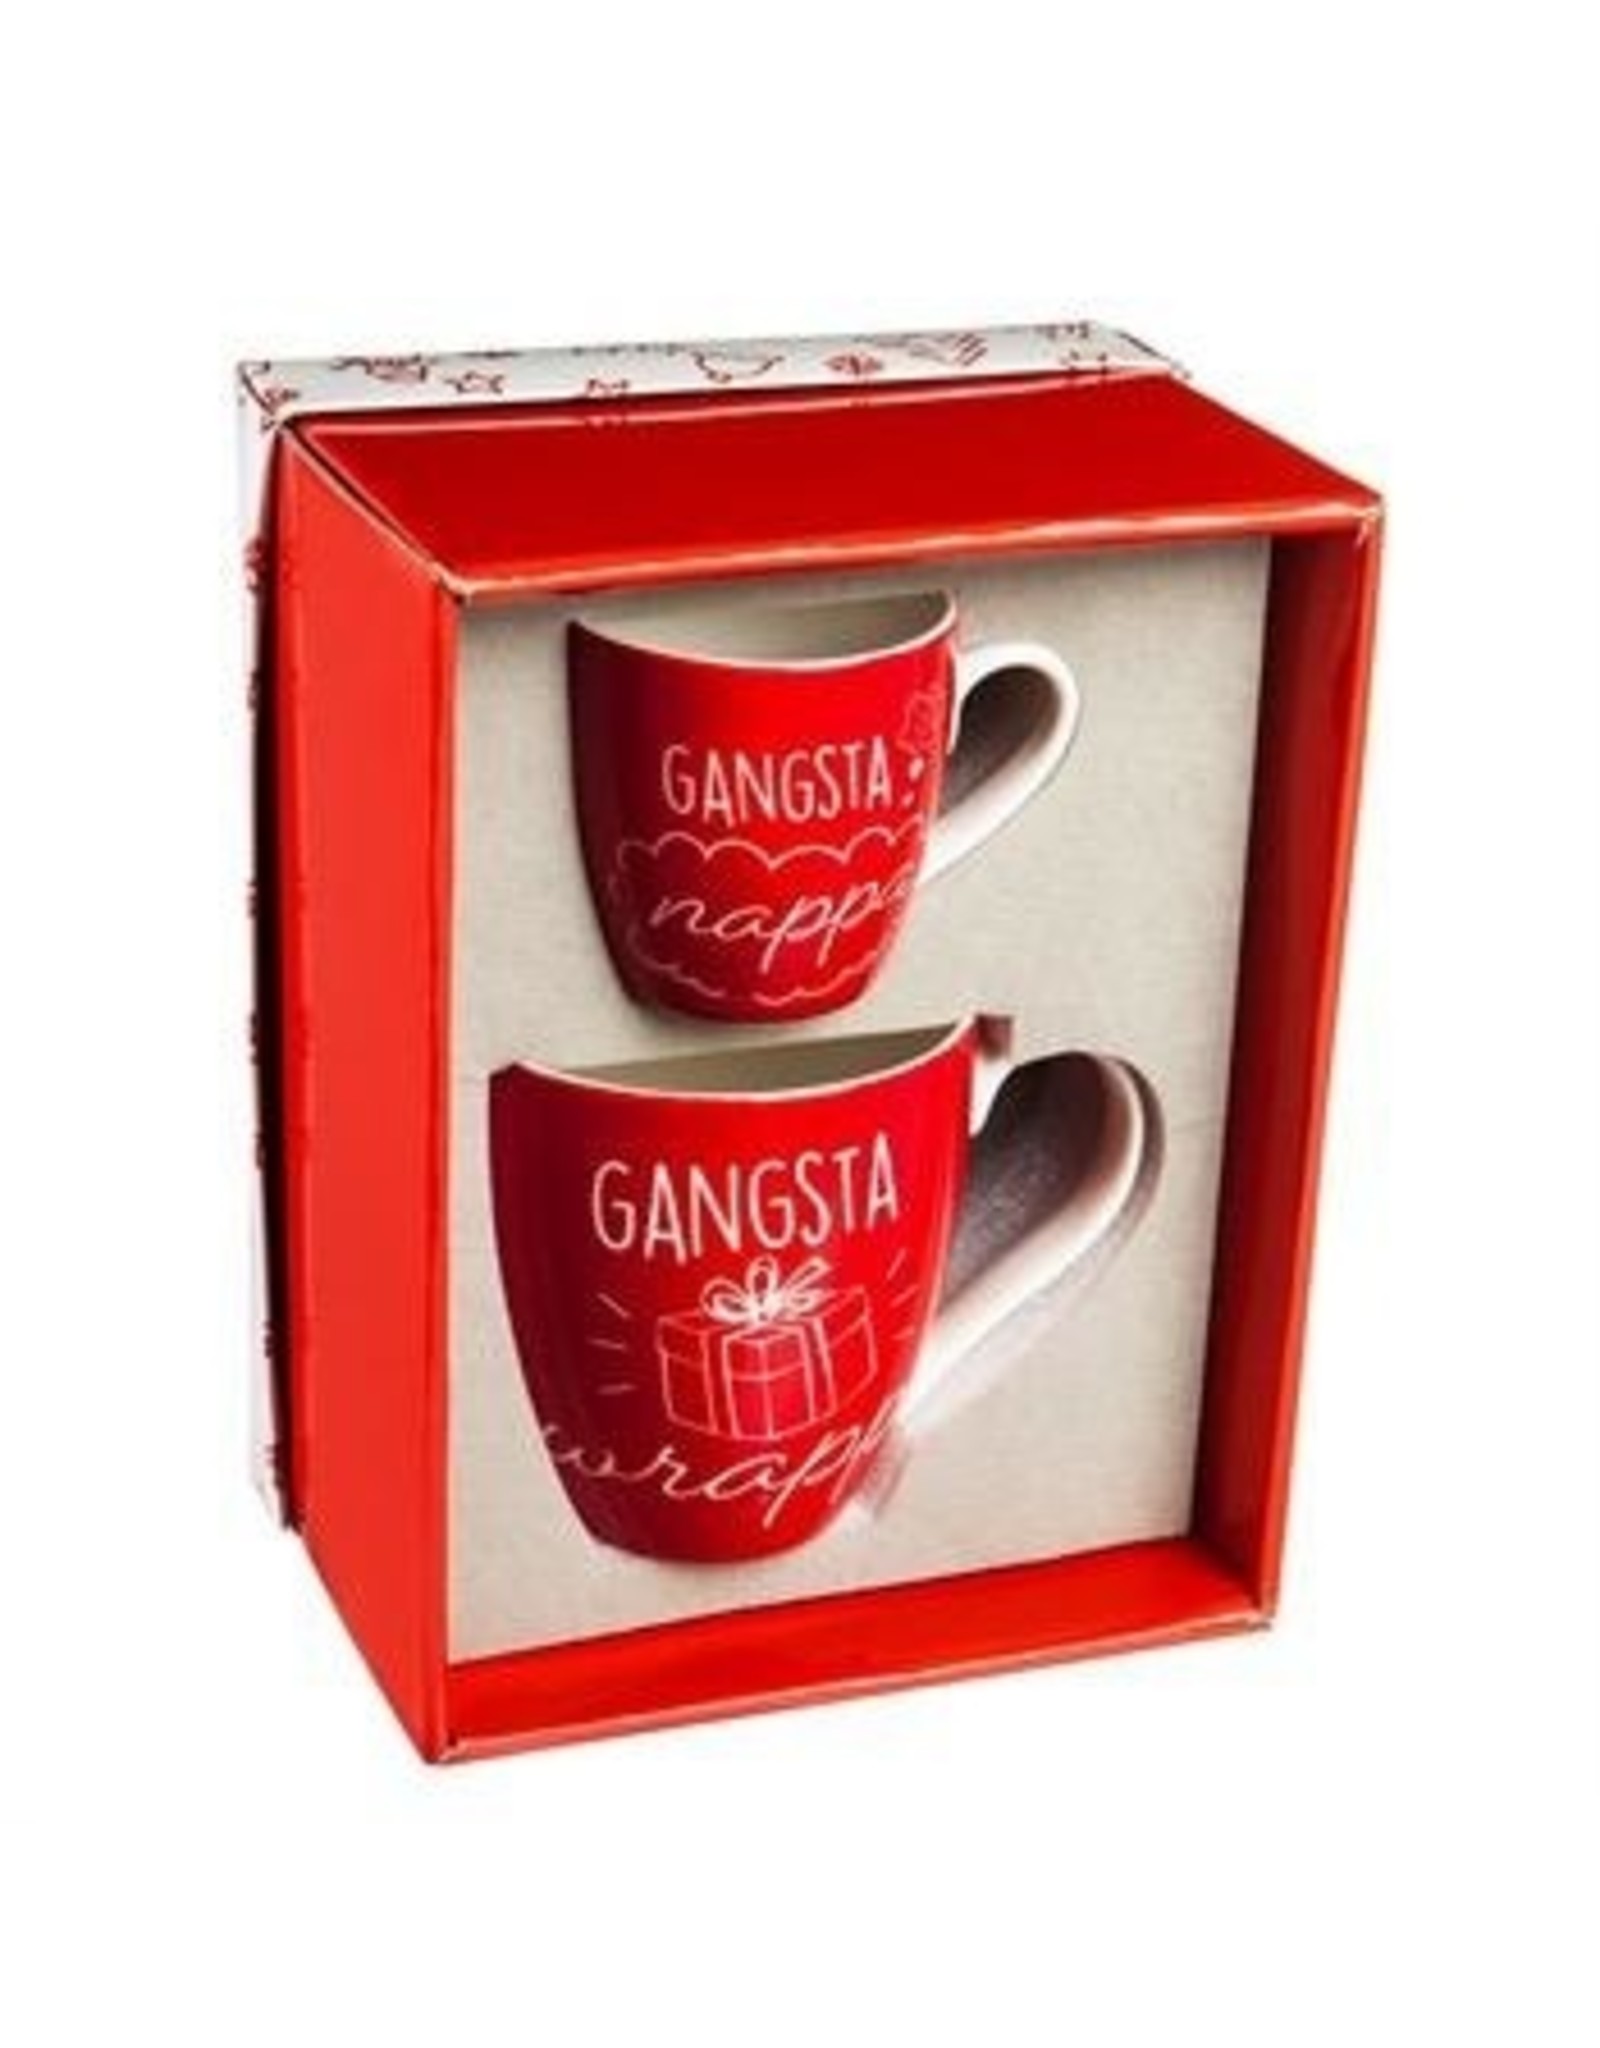 Evergreen Enterprises Gangsta Wrappa and Gangsta Nappa